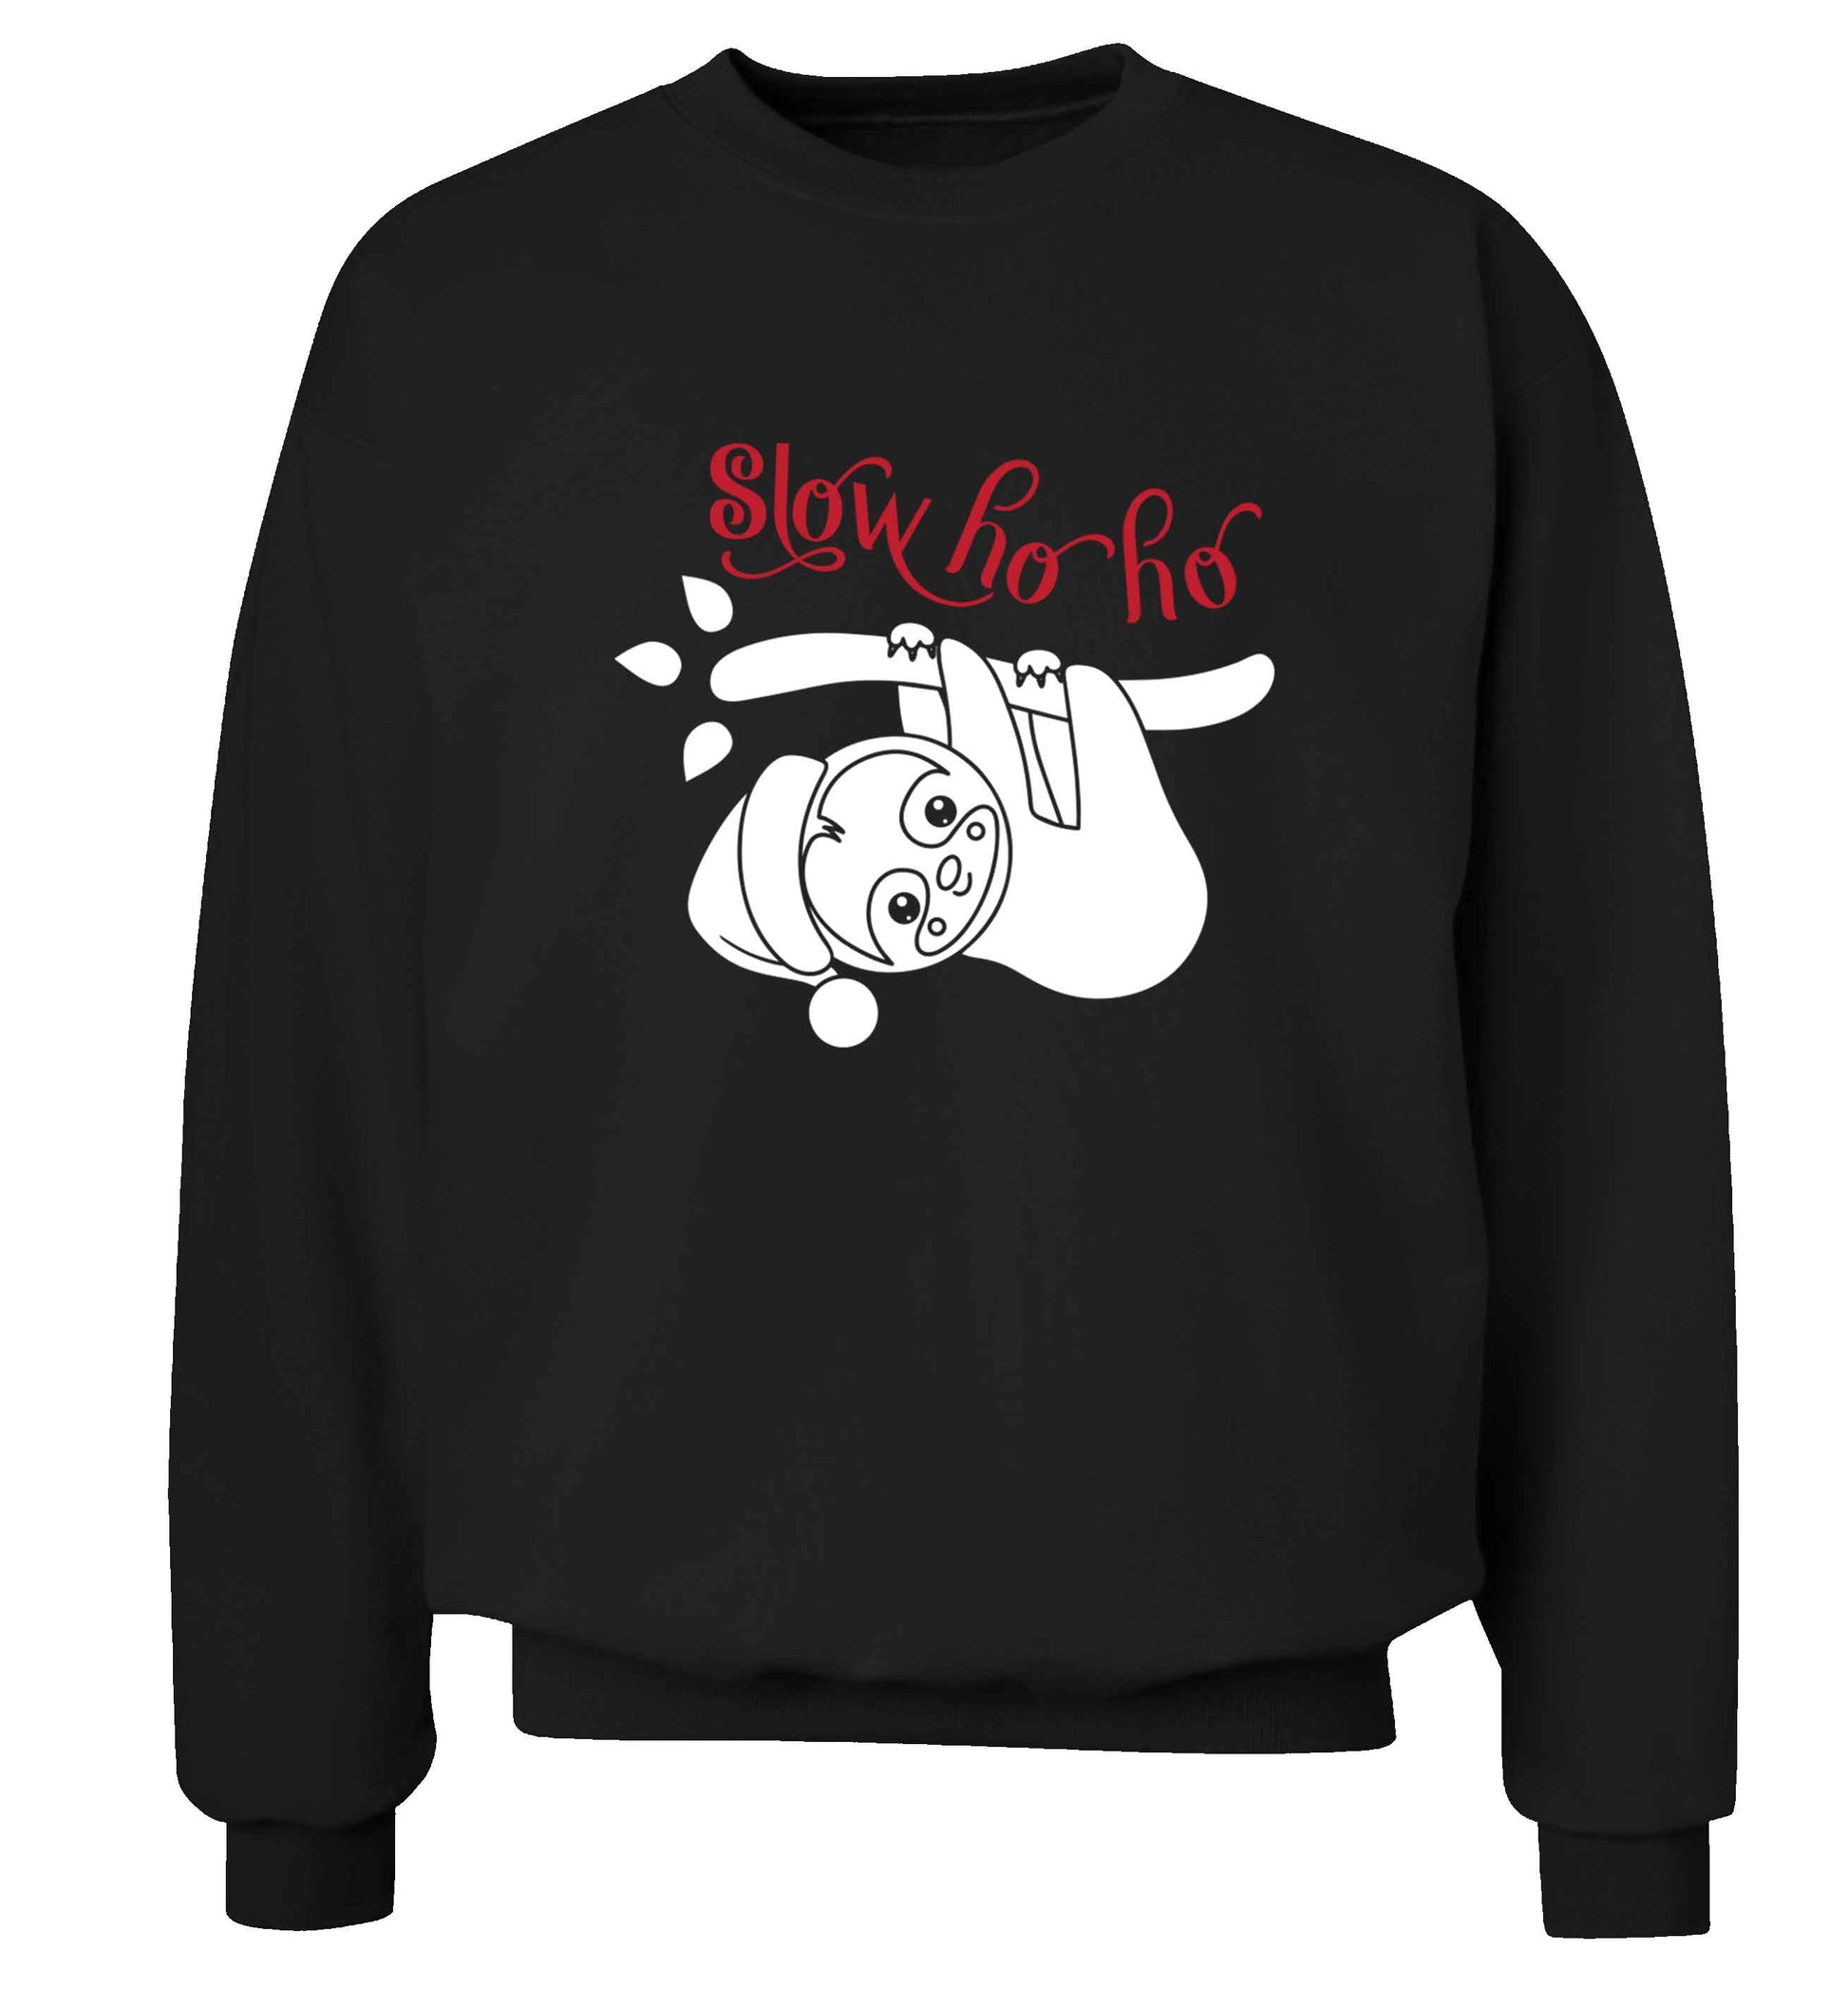 Slow Ho Ho adult's unisex black sweater 2XL